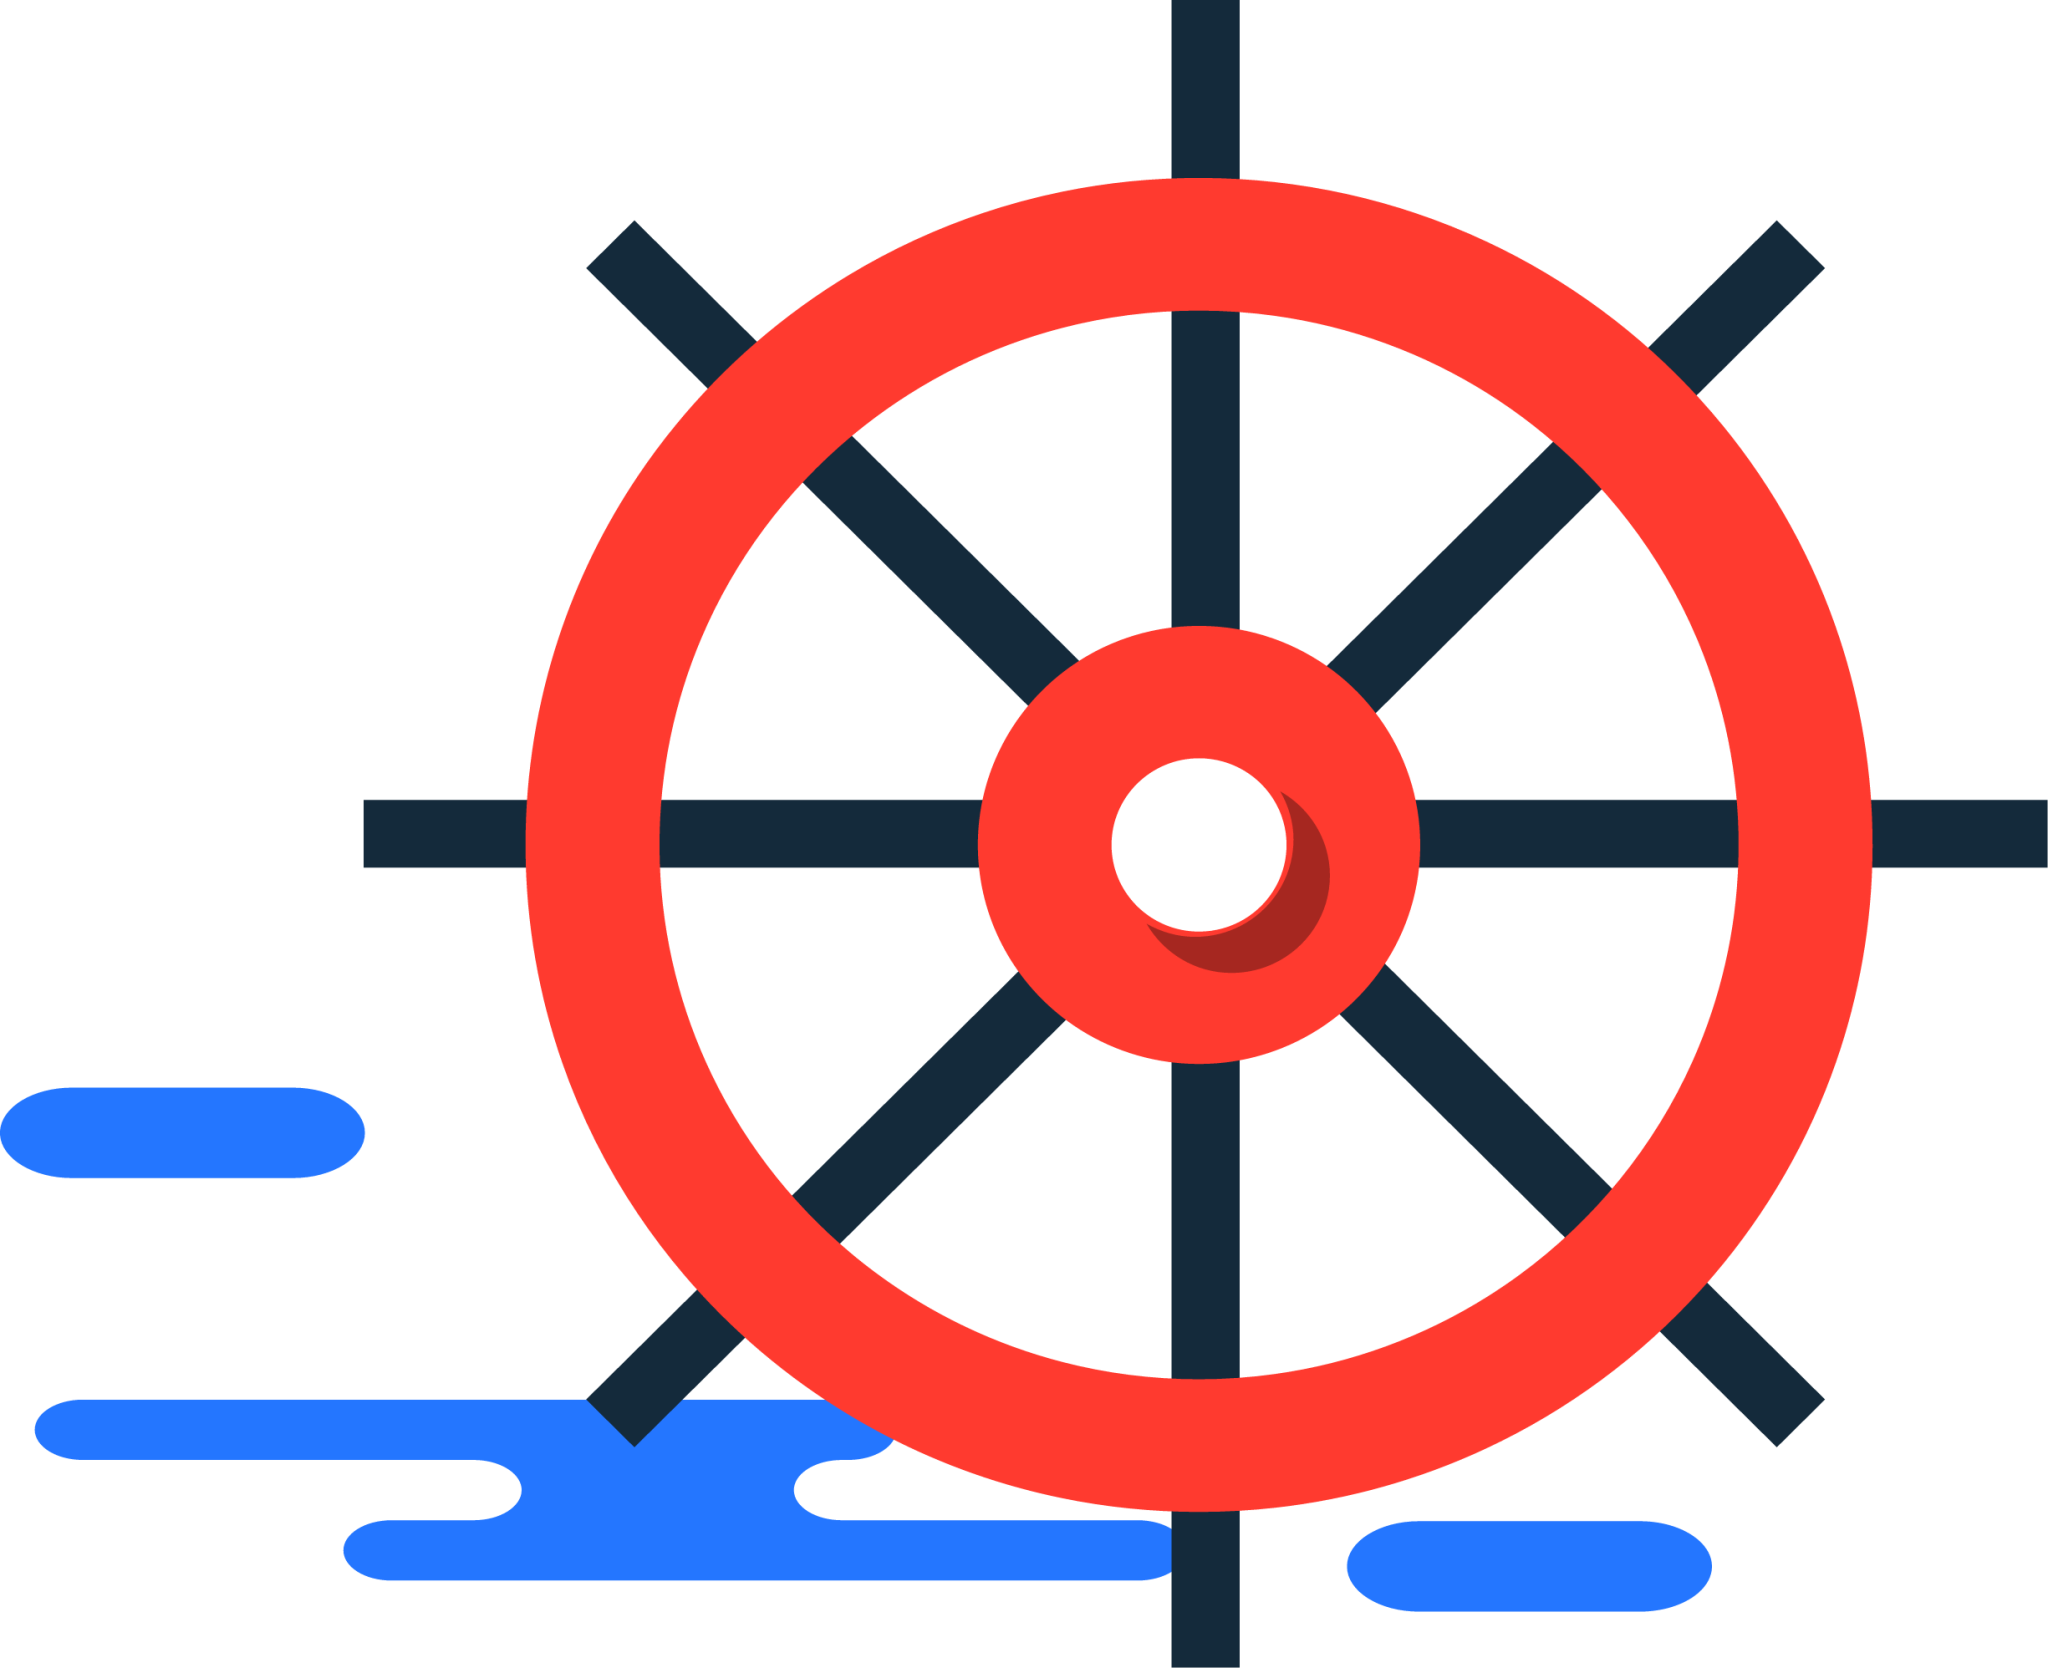 ship wheel illustration